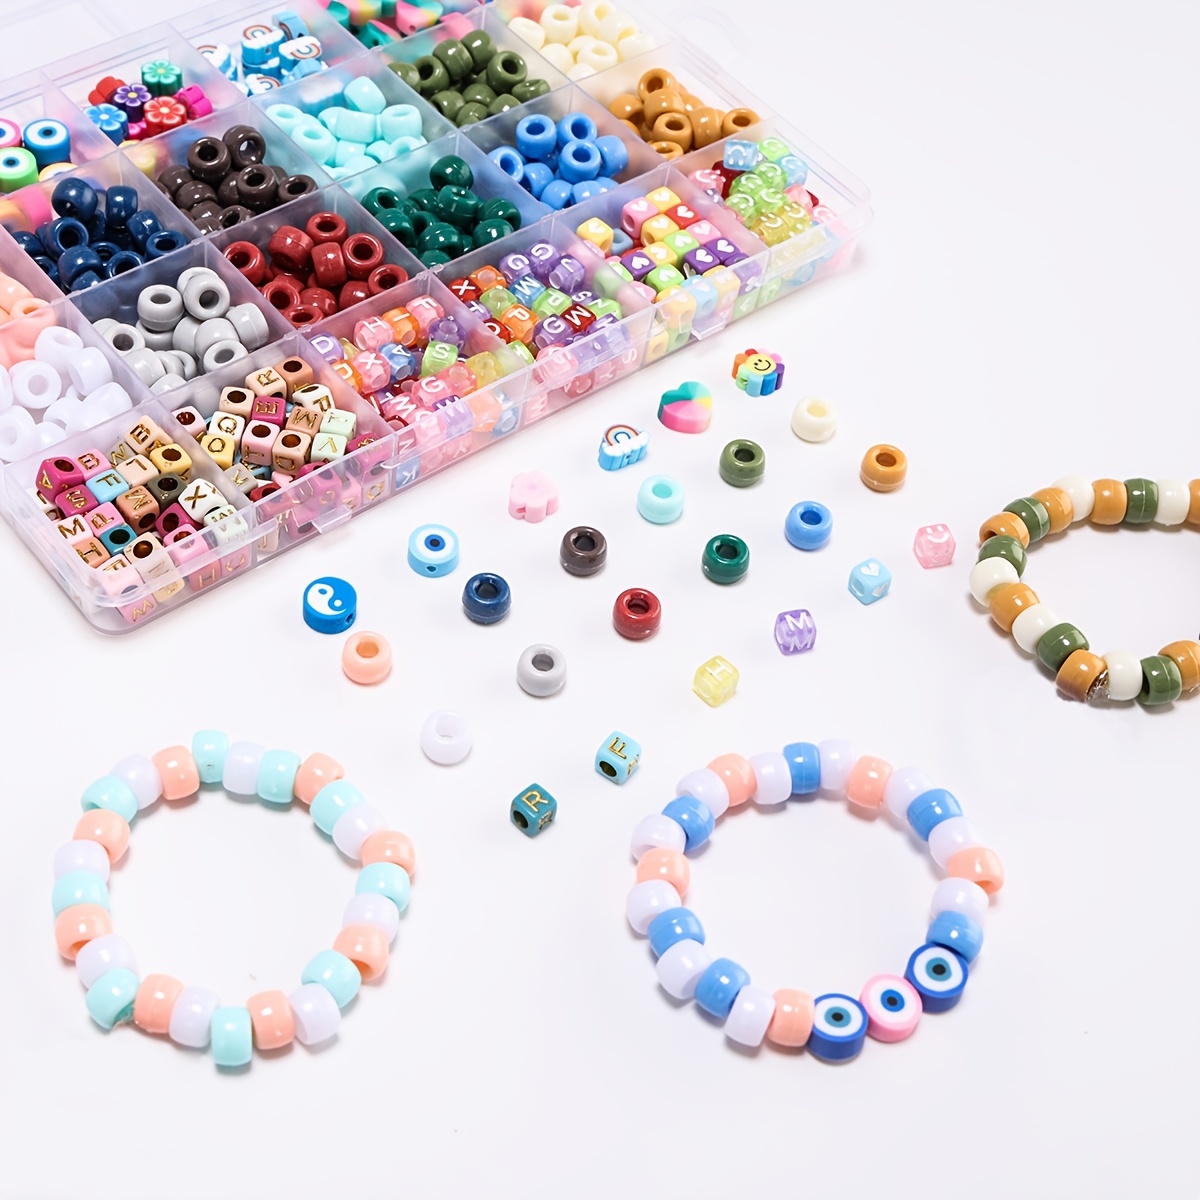 Bead Bracelet Making Kit, Cridoz Bead Kits for Bracelets Making with Pony  Beads, Polymer Fruit Clay Beads, Charm Beads, Letter B